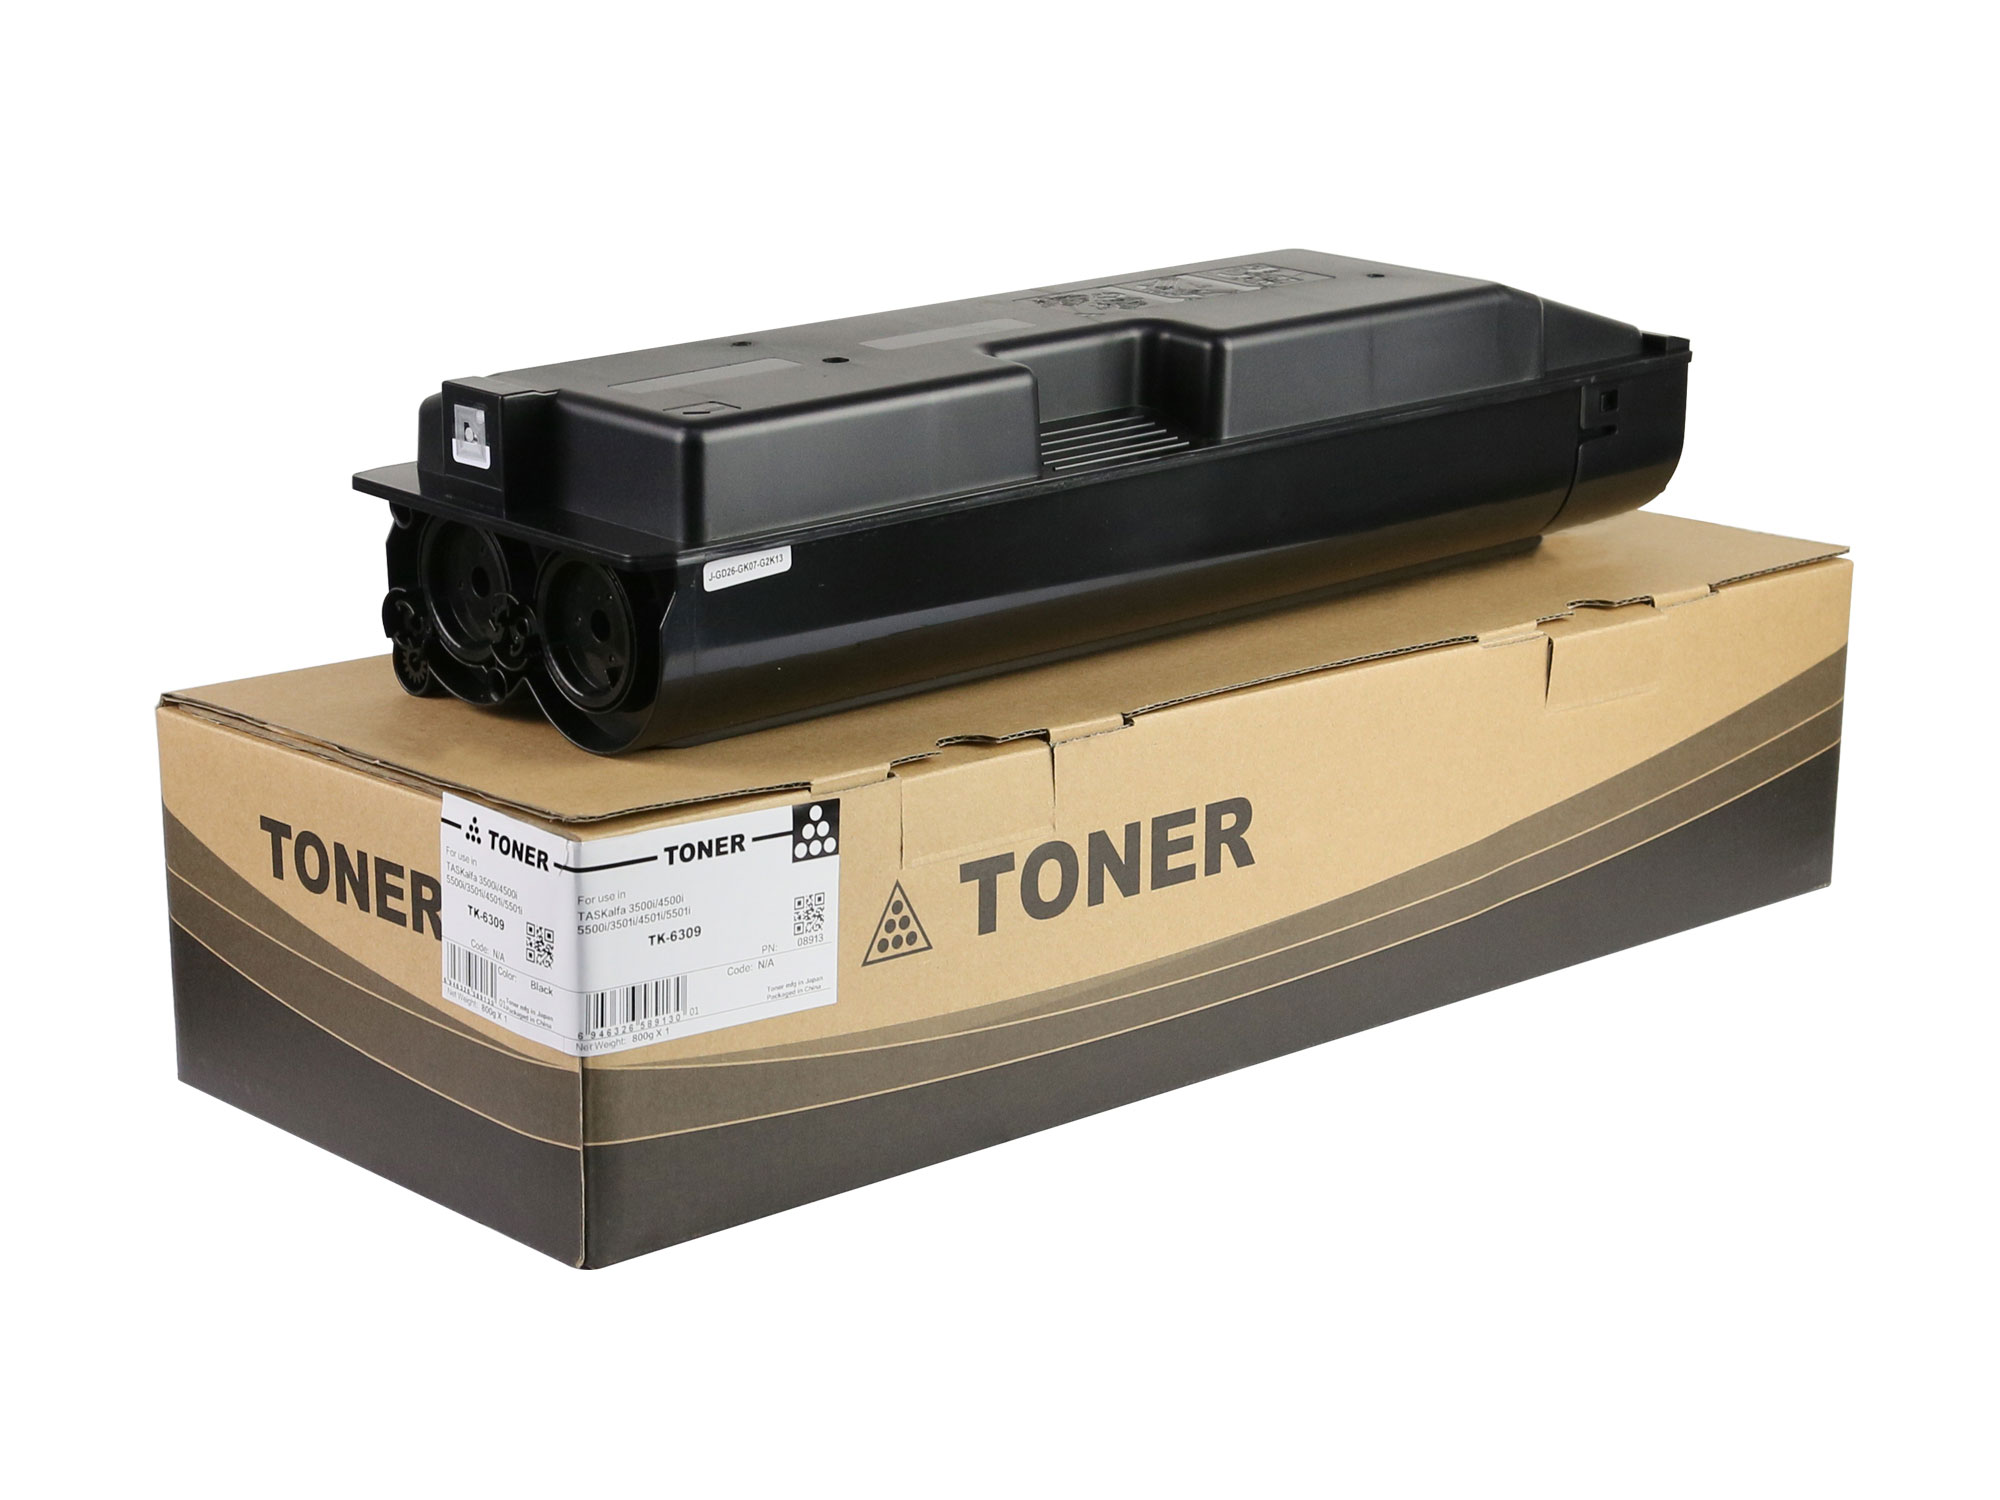 TK-6309 Toner Cartridge for Kyocera TASKalfa 3500i